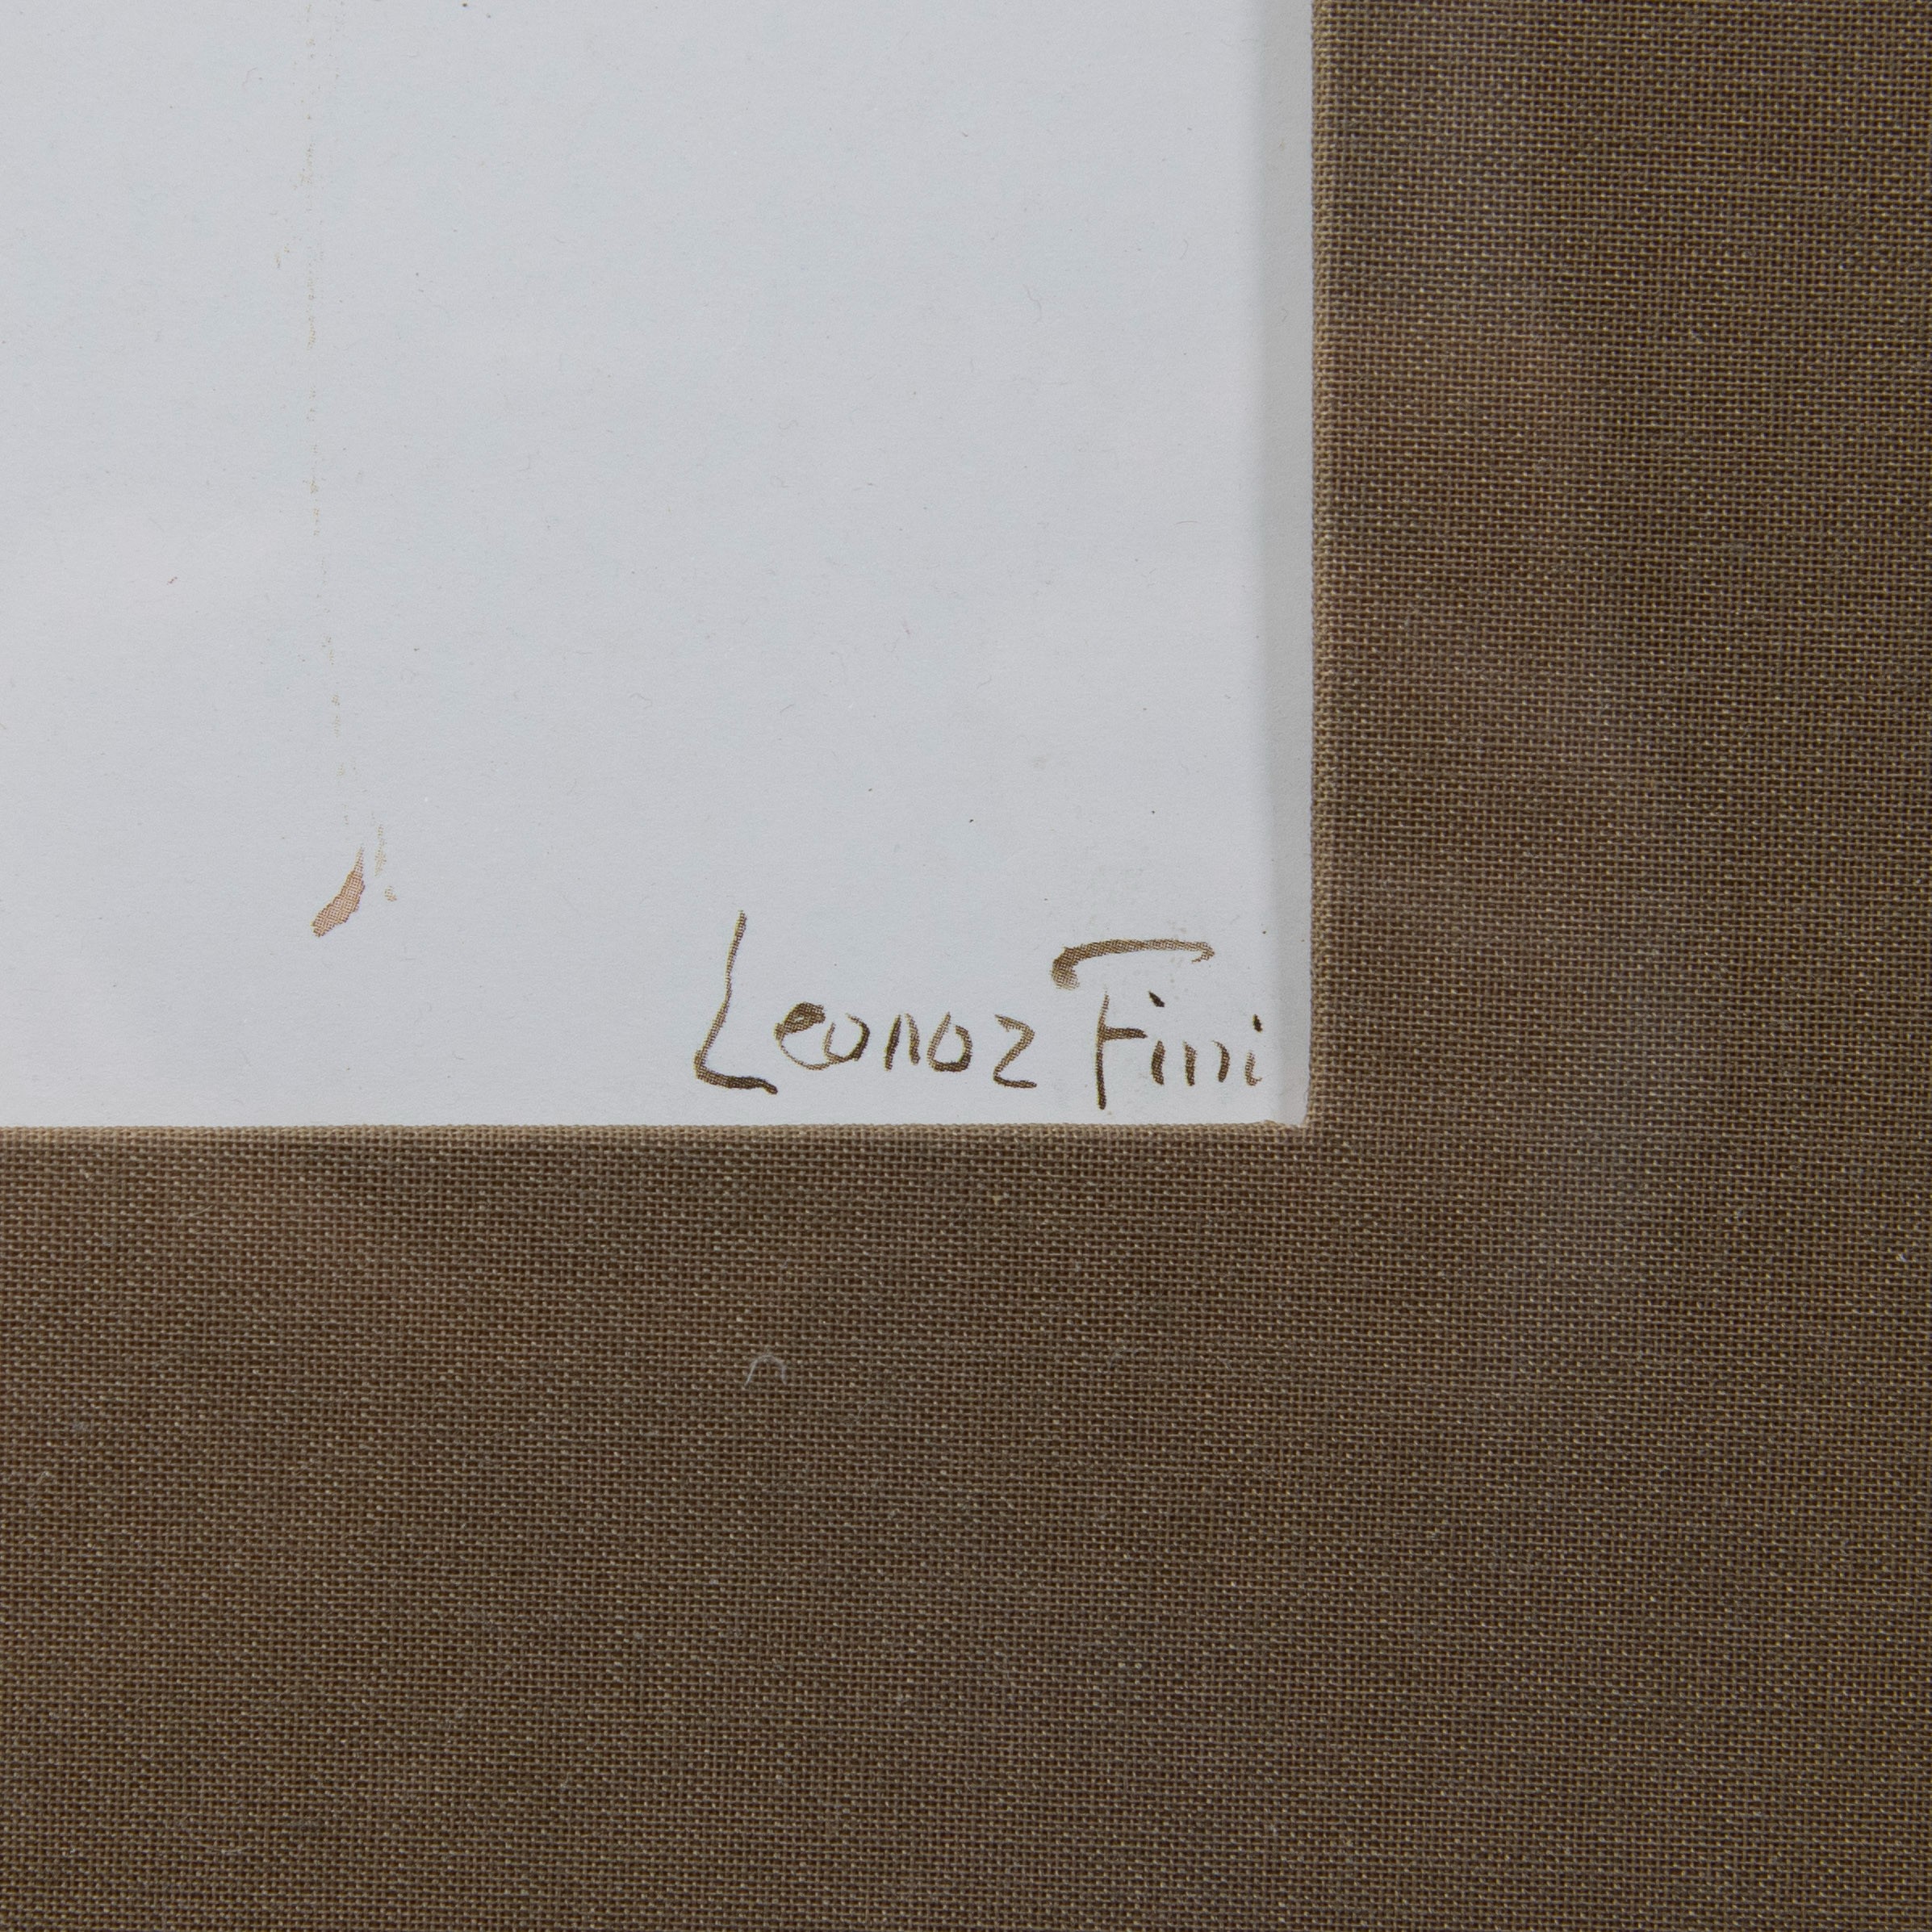 Leonor FINI (1907-1996) - Image 3 of 3